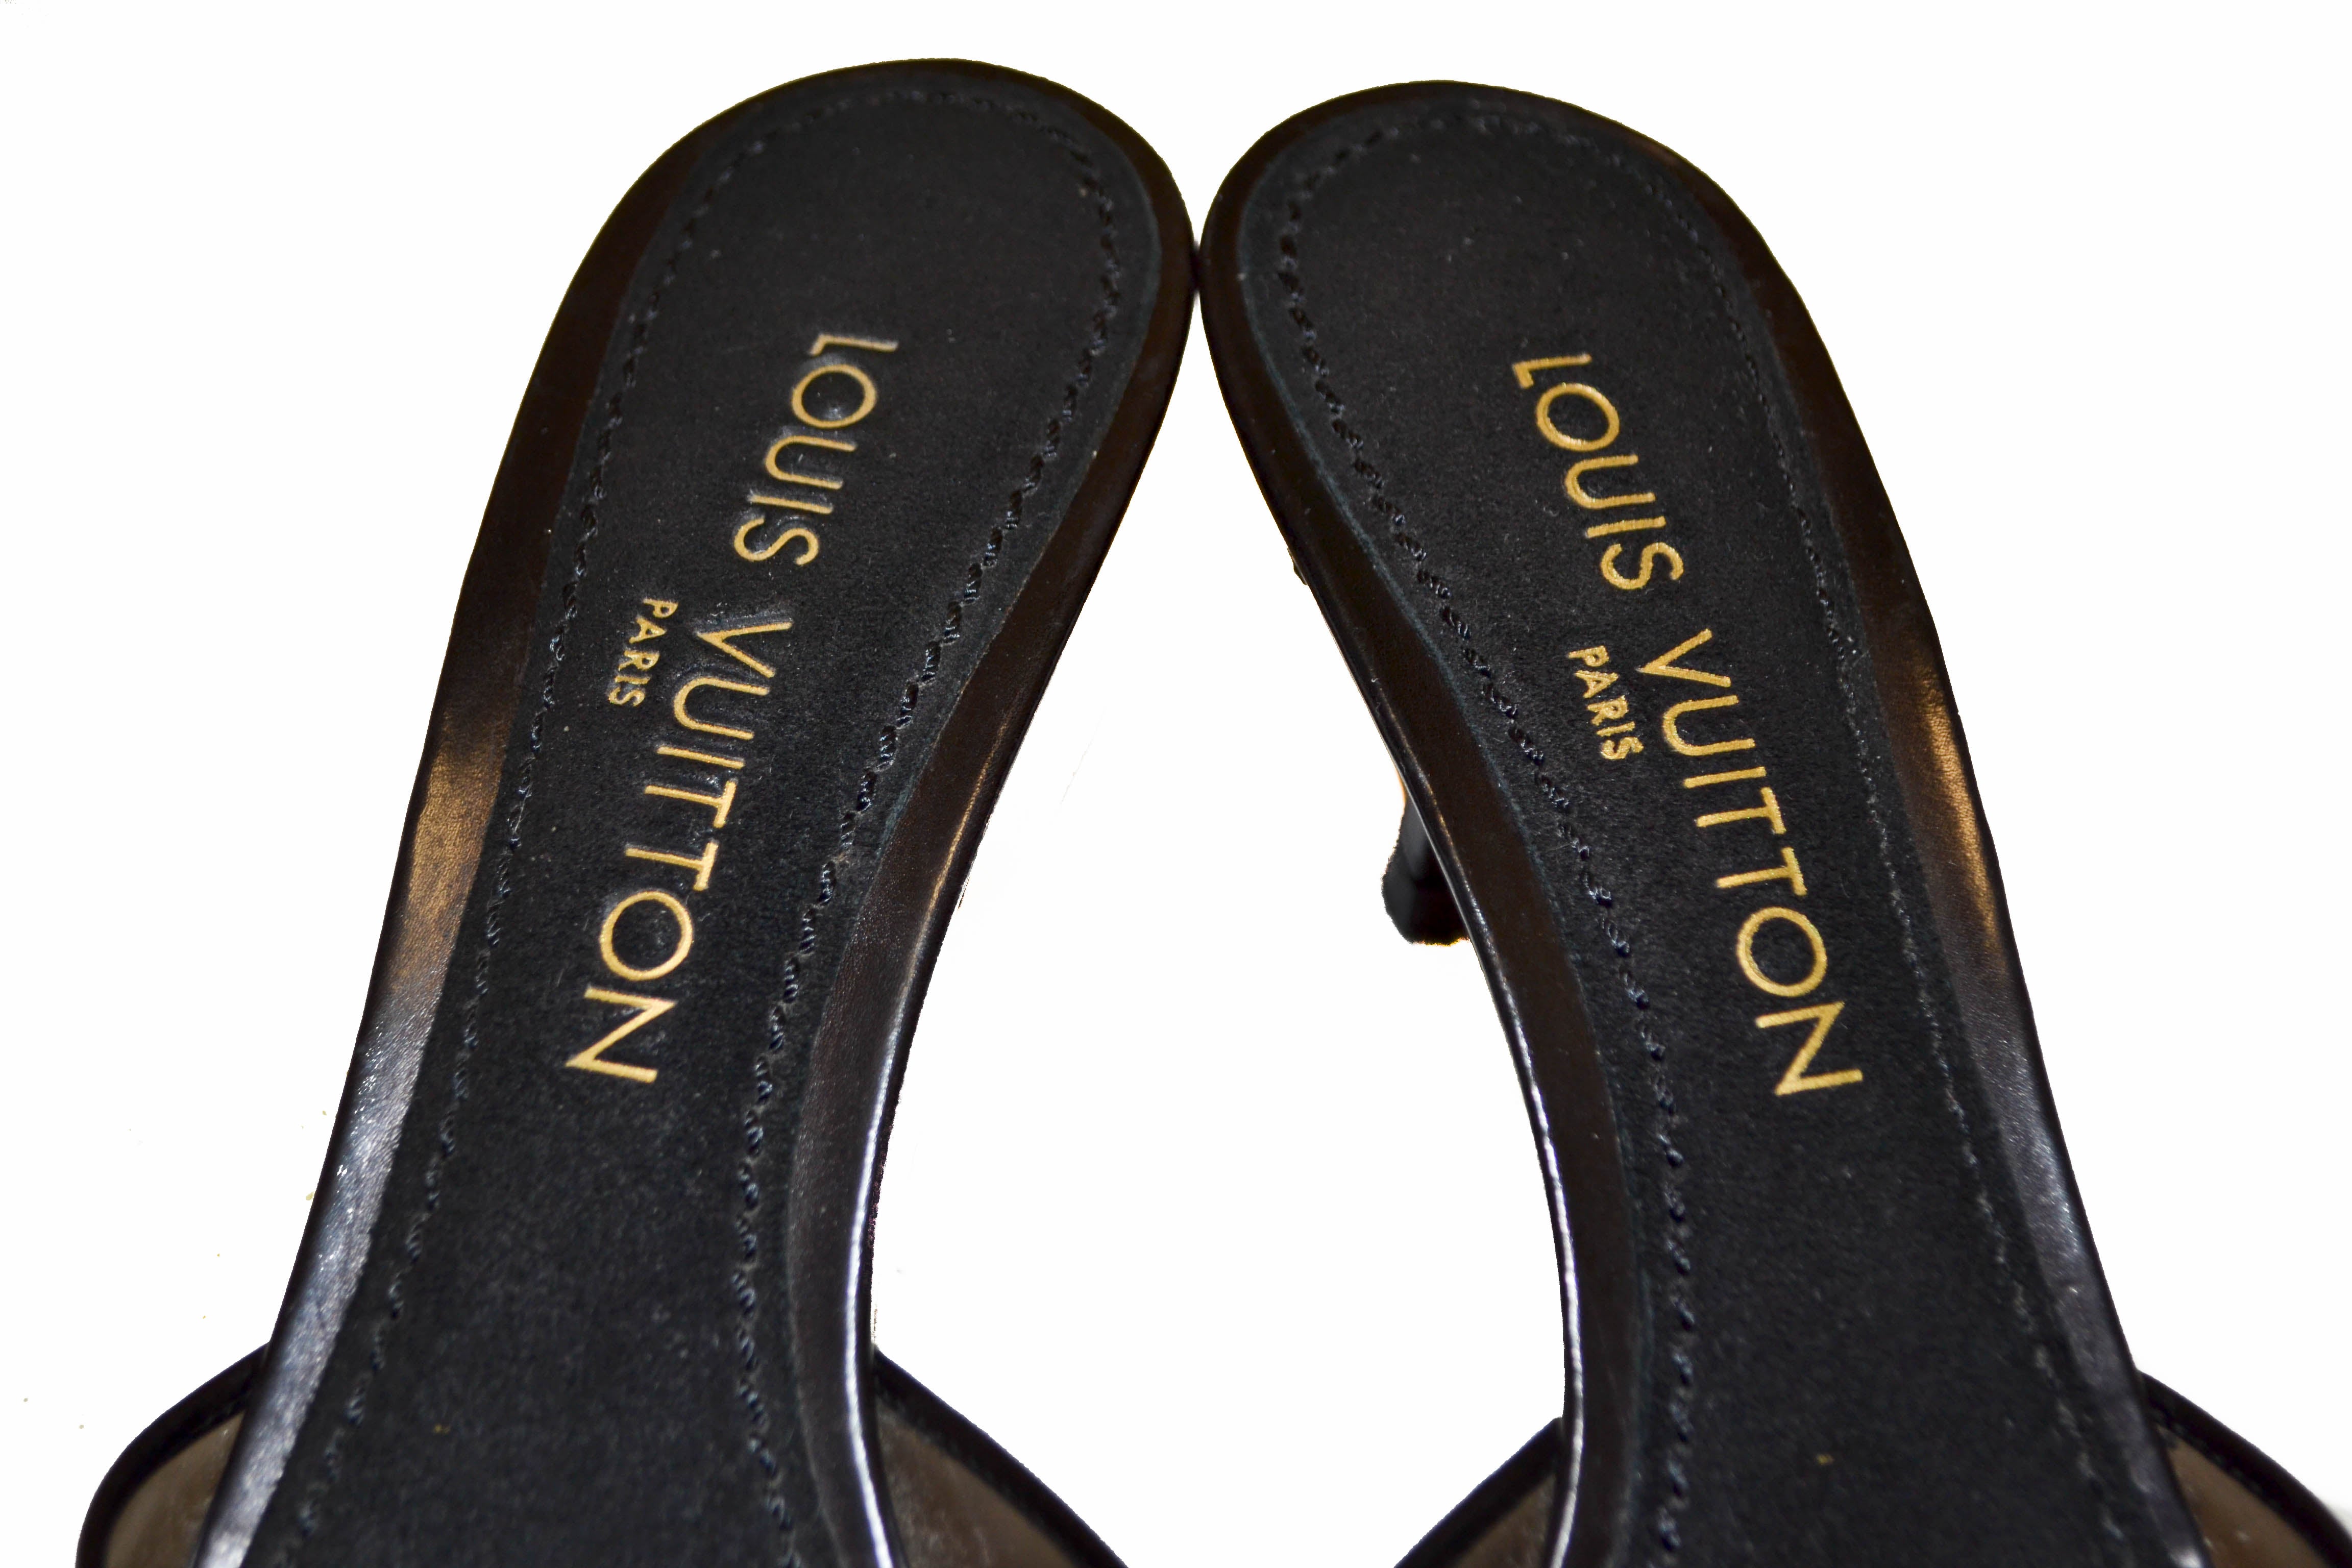 Authentic LV lockit mule sandal